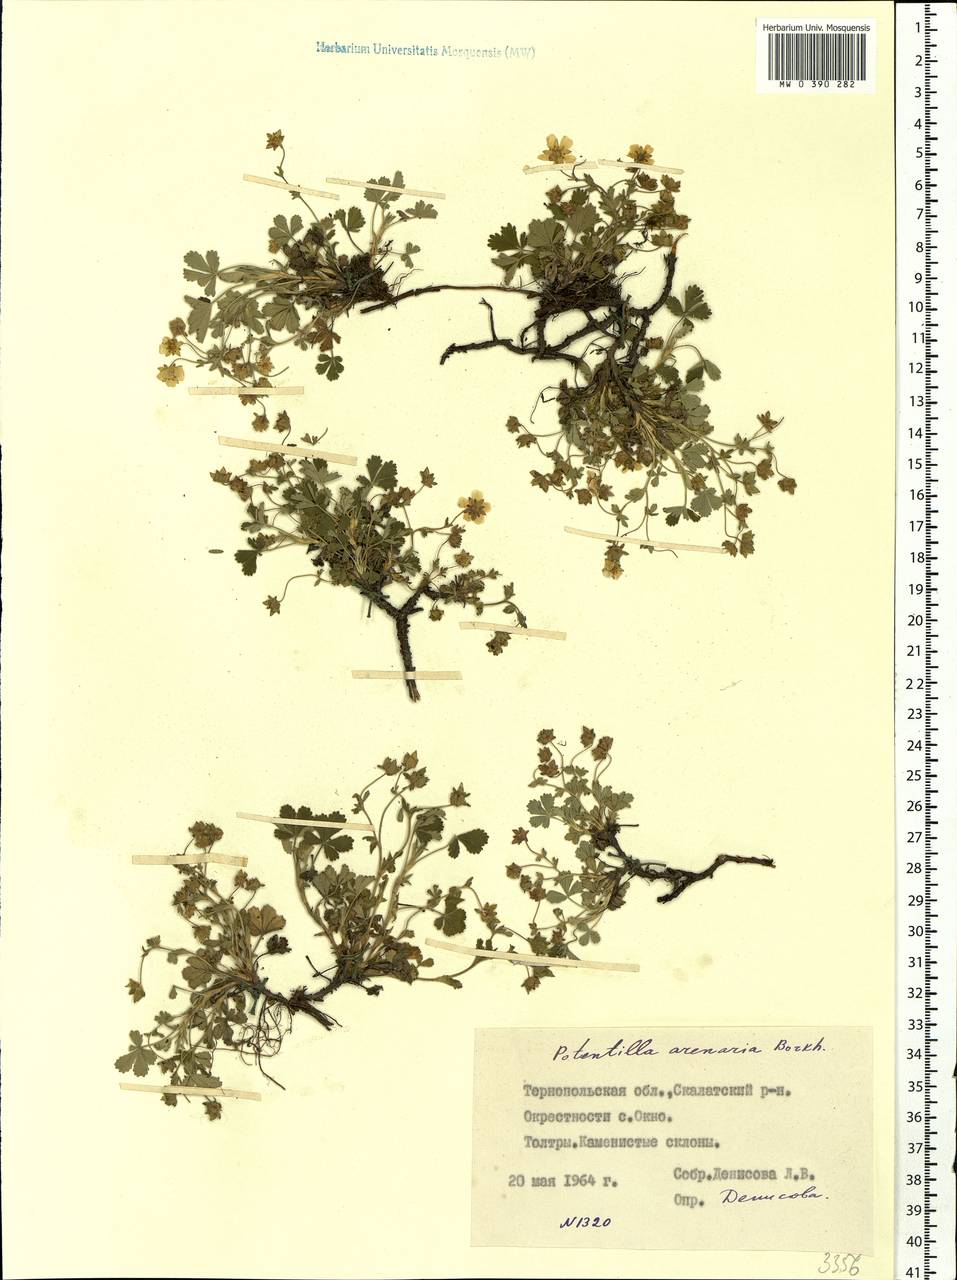 Potentilla cinerea subsp. incana (G. Gaertn., B. Mey. & Scherb.) Asch., Восточная Европа, Южно-Украинский район (E12) (Украина)